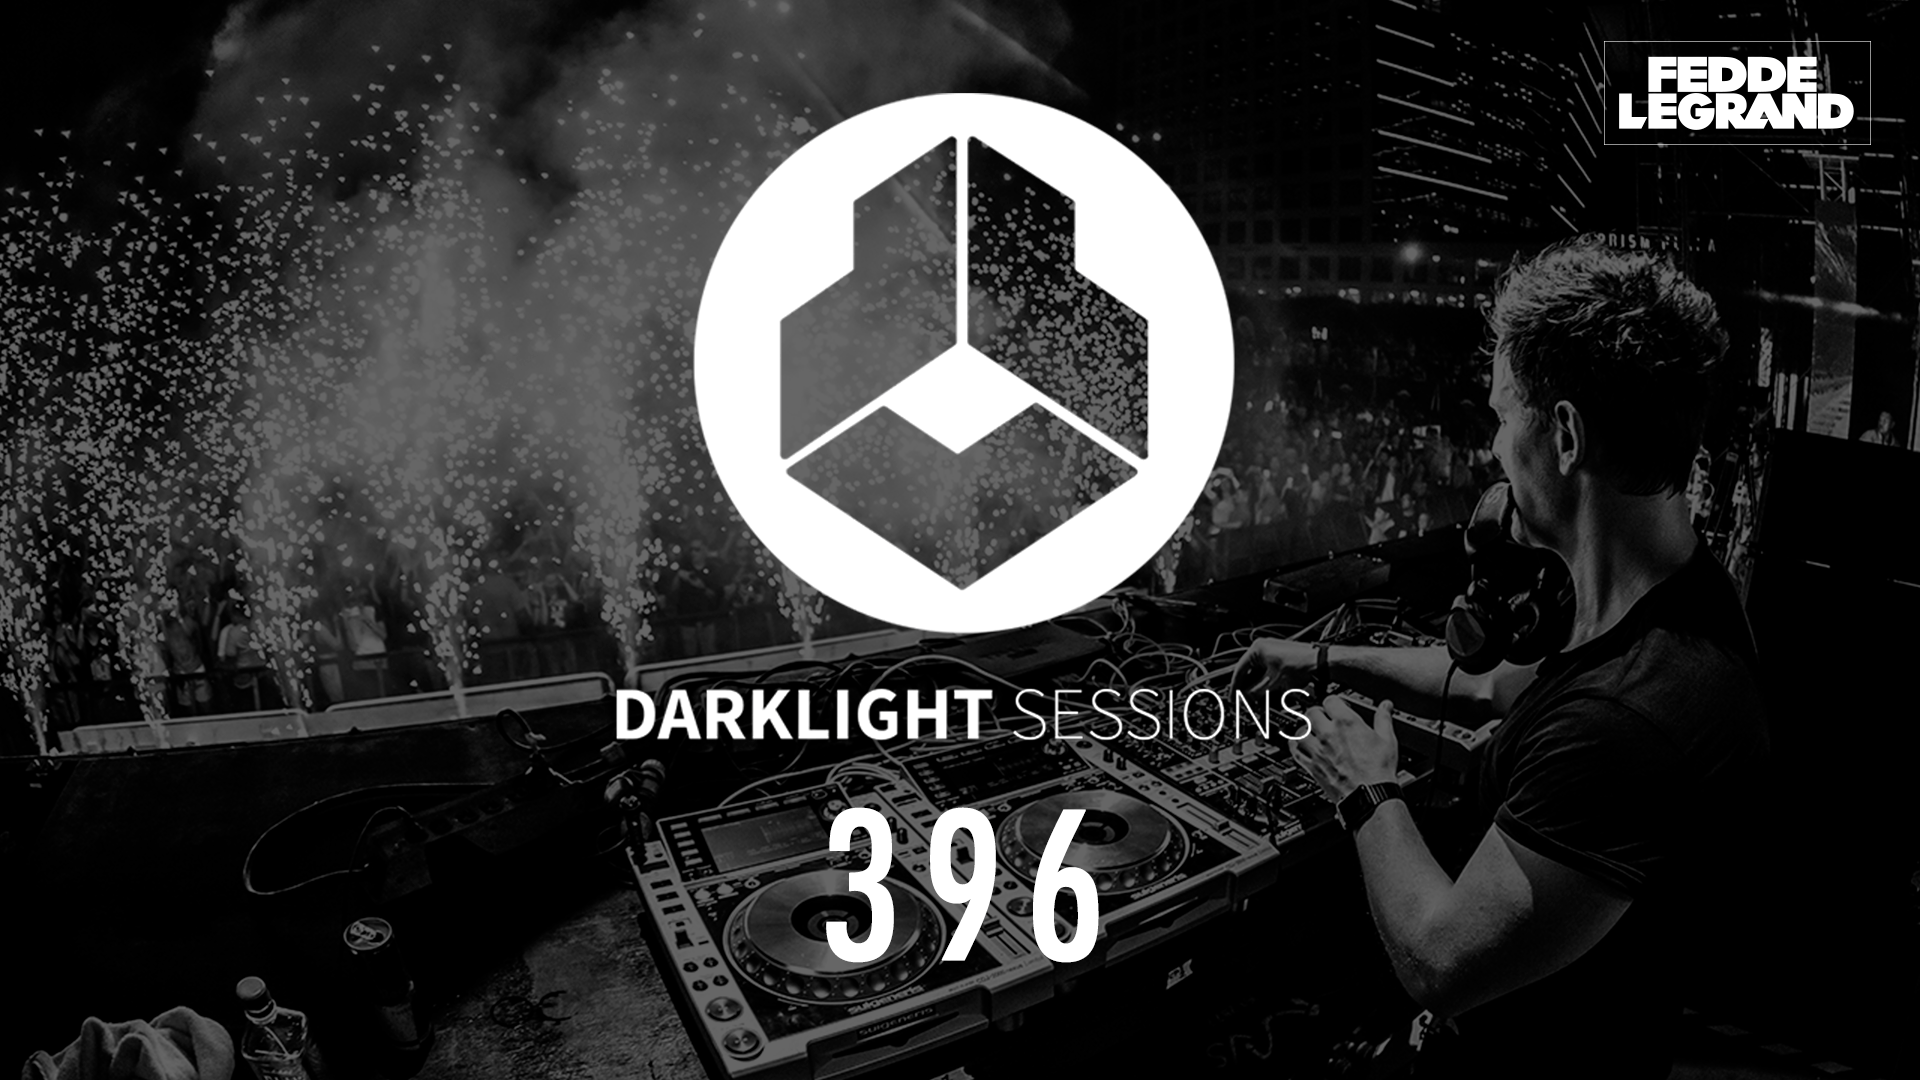 Darklight Sessions 396